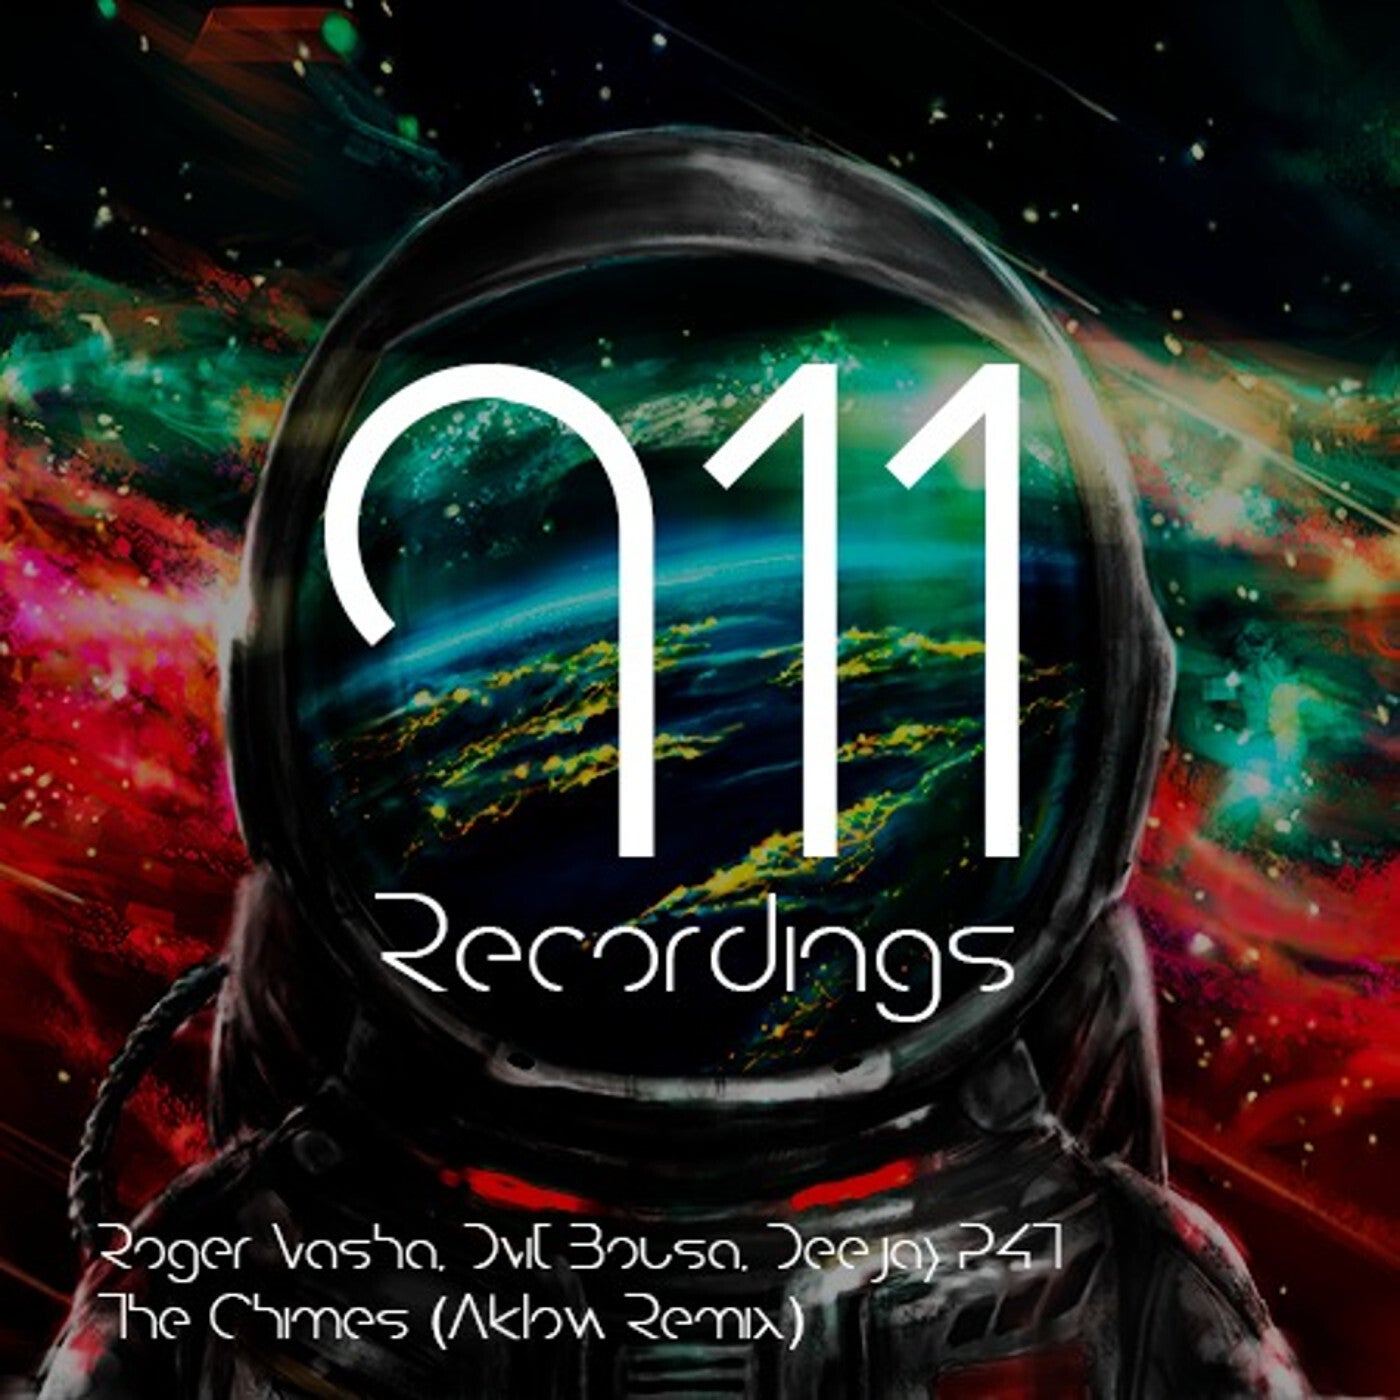 Deejay P4T, Dvit Bousa & Roger Vasha - The Chimes (Aklow Remix) [911 Recordings]